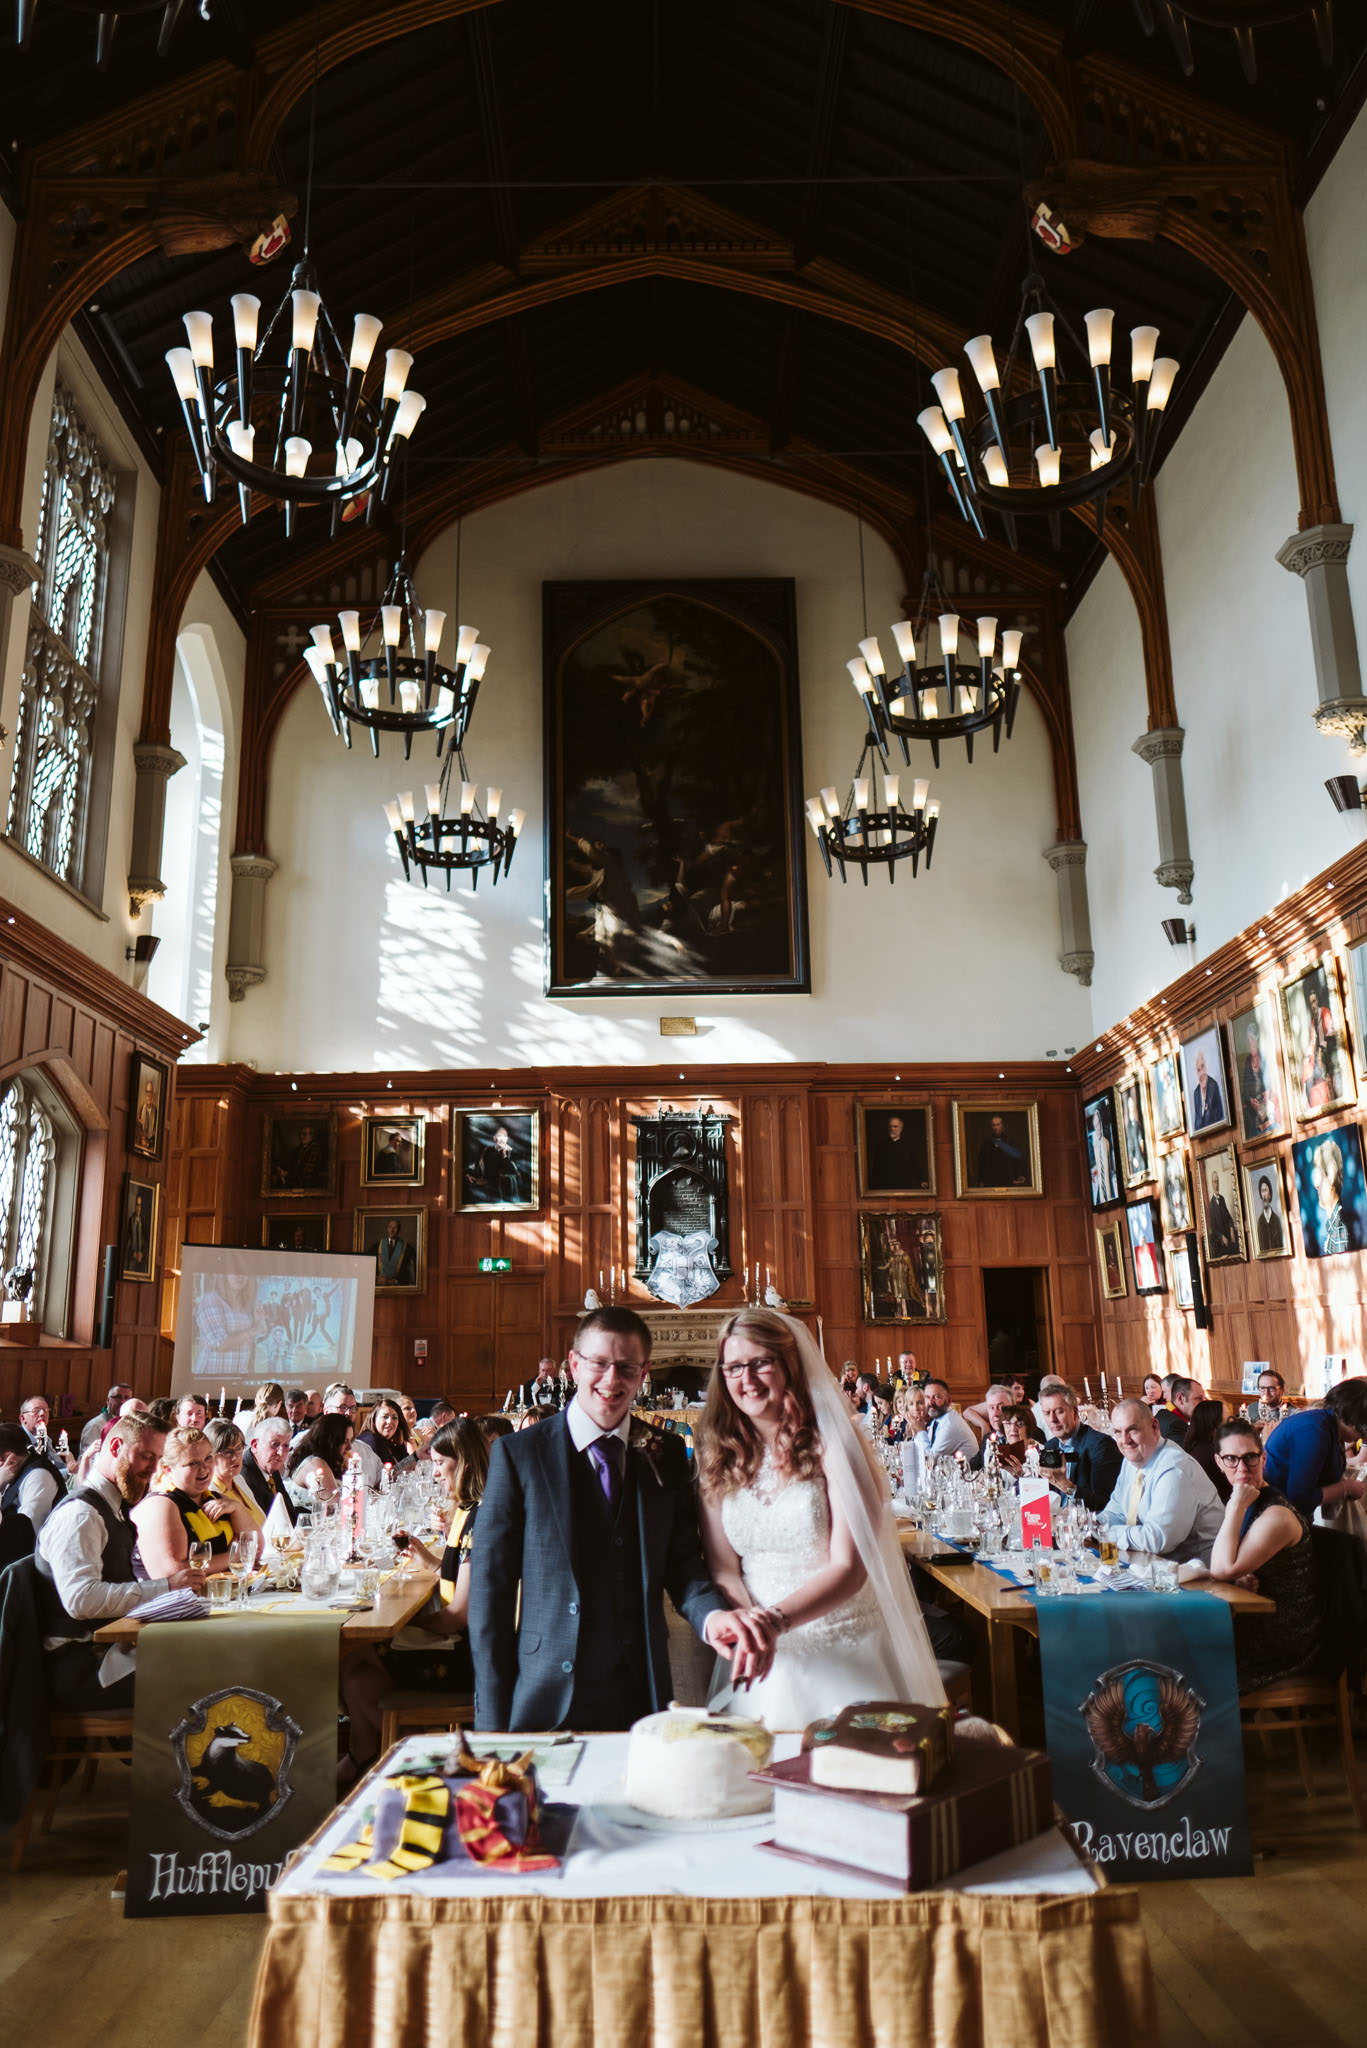 Harry Potter Themed Wedding, Riddel Hall, Great Hall, Hogwarts, Queens University Belfast, Northern Ireland